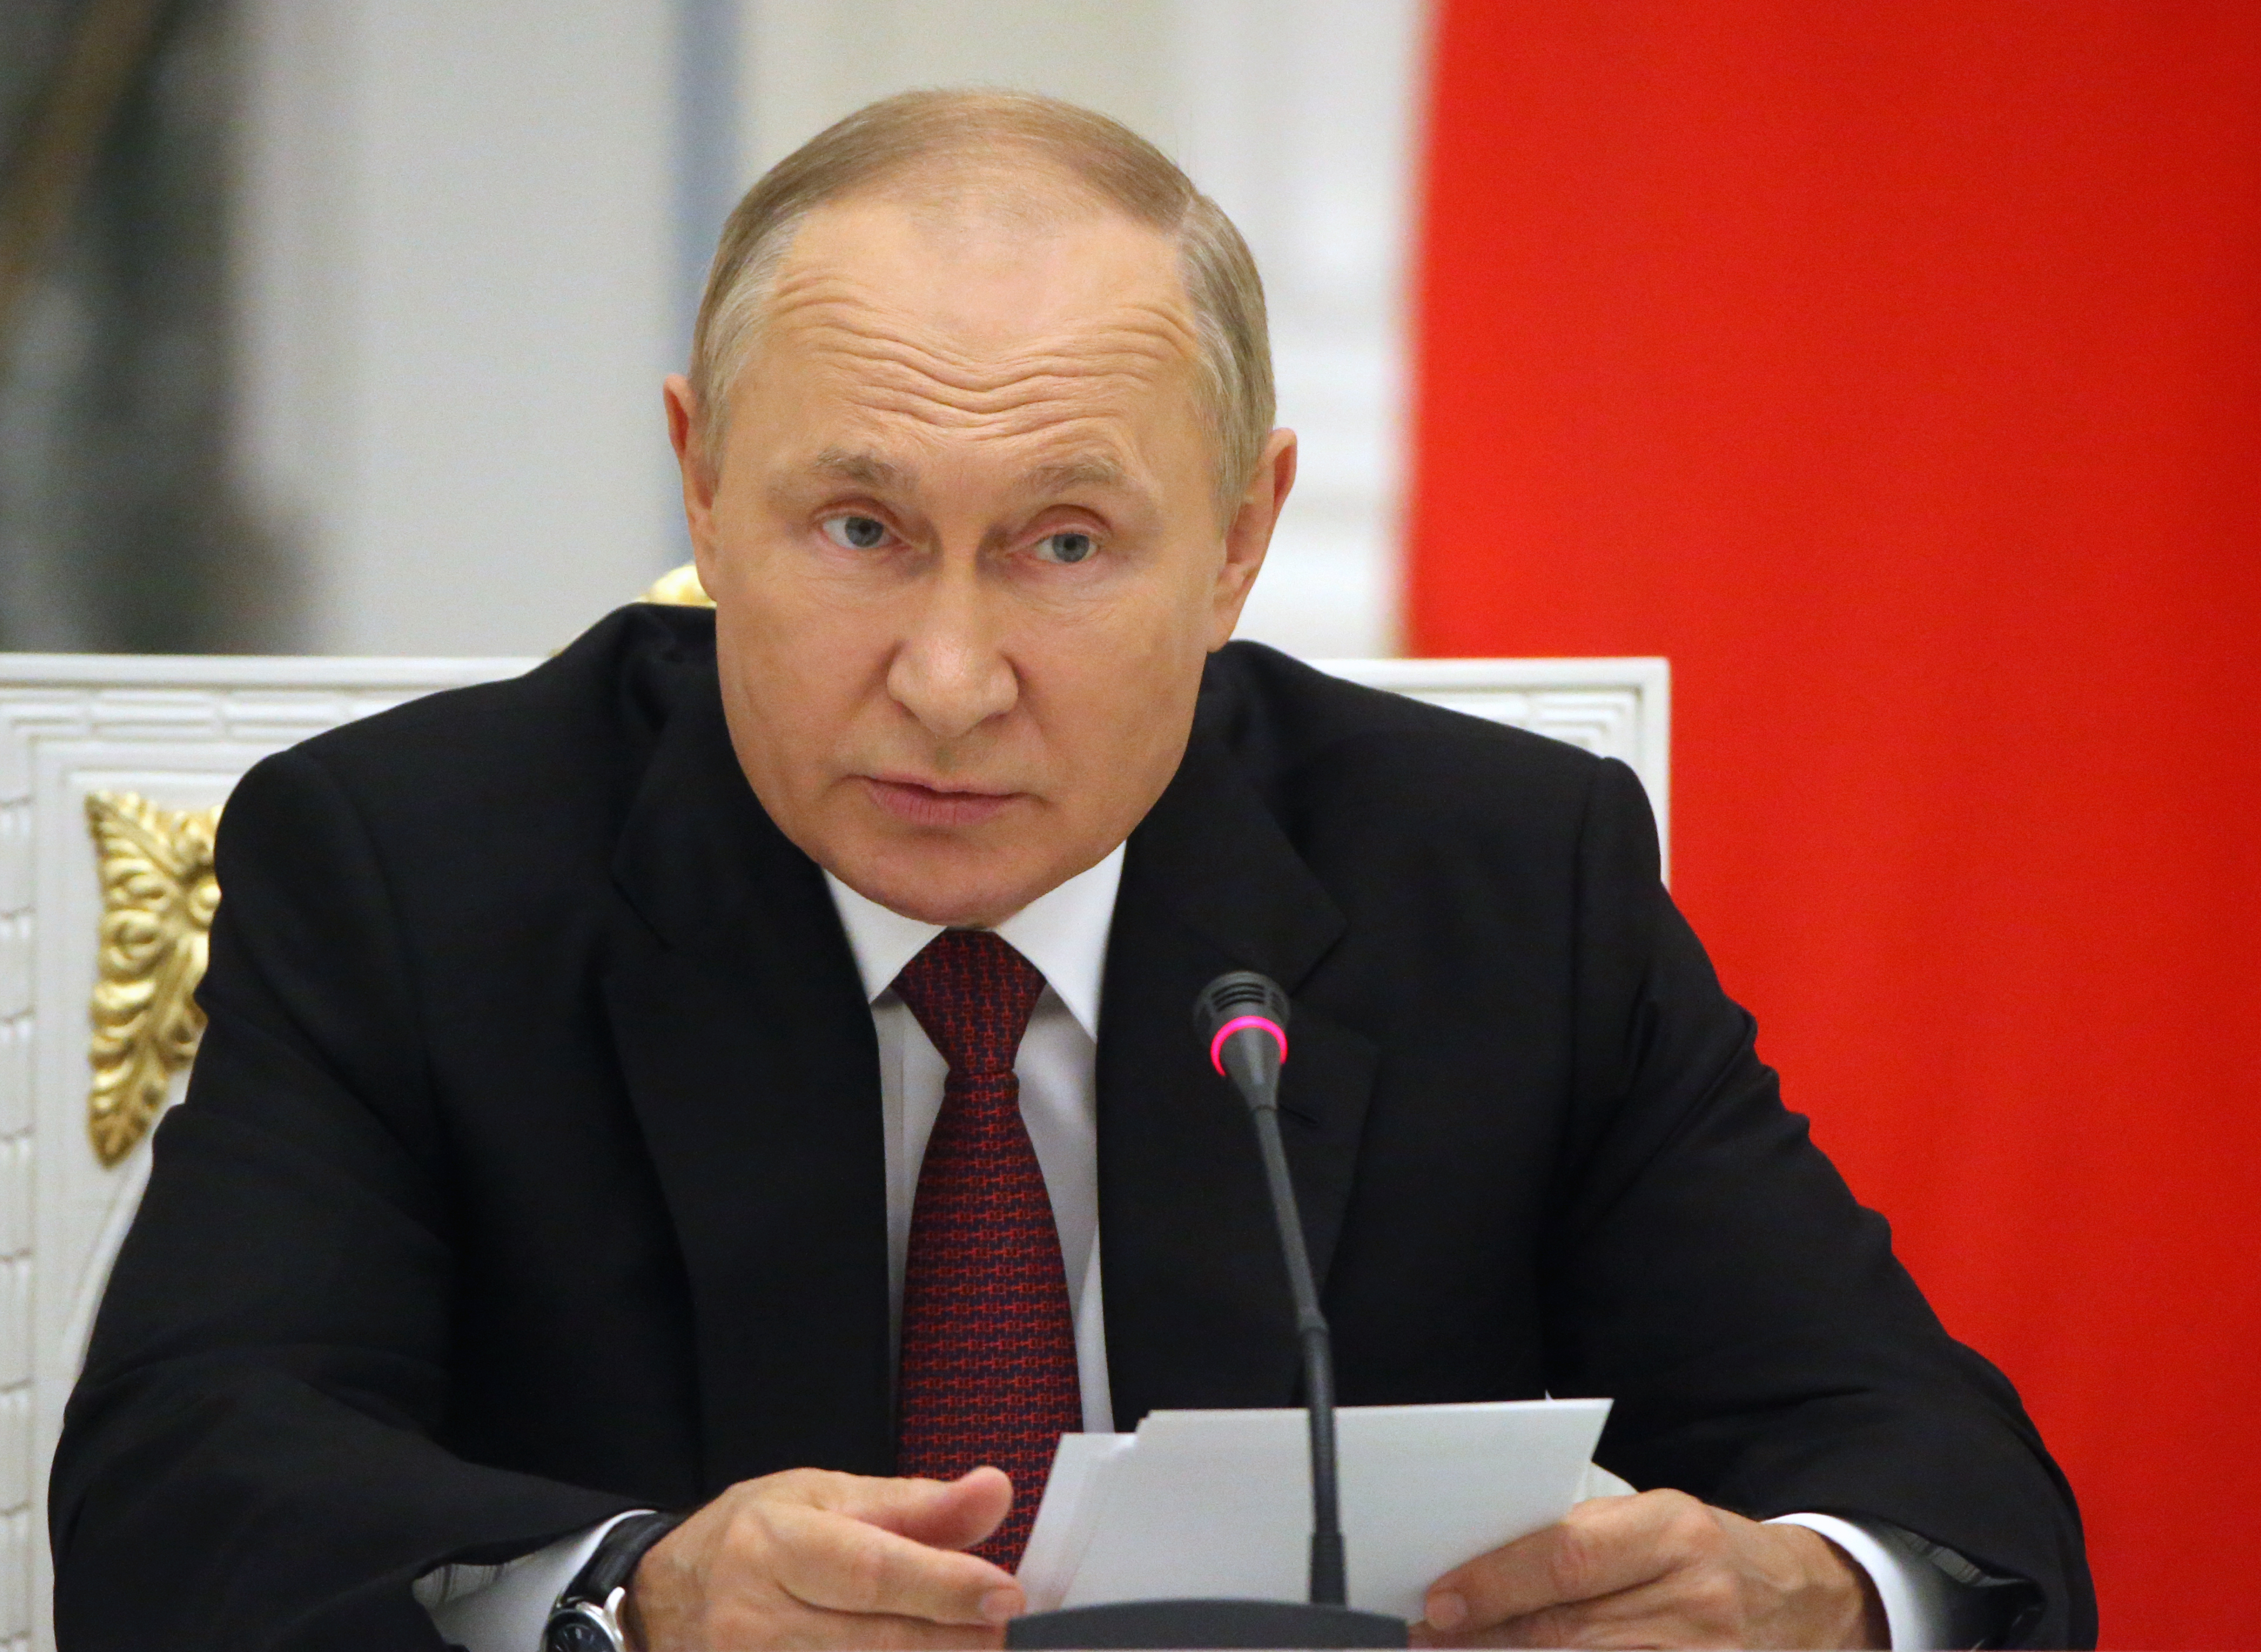 Vladimir Putin Threatens Nuclear Strikes Over Ukraine—'This Is Not a Bluff'